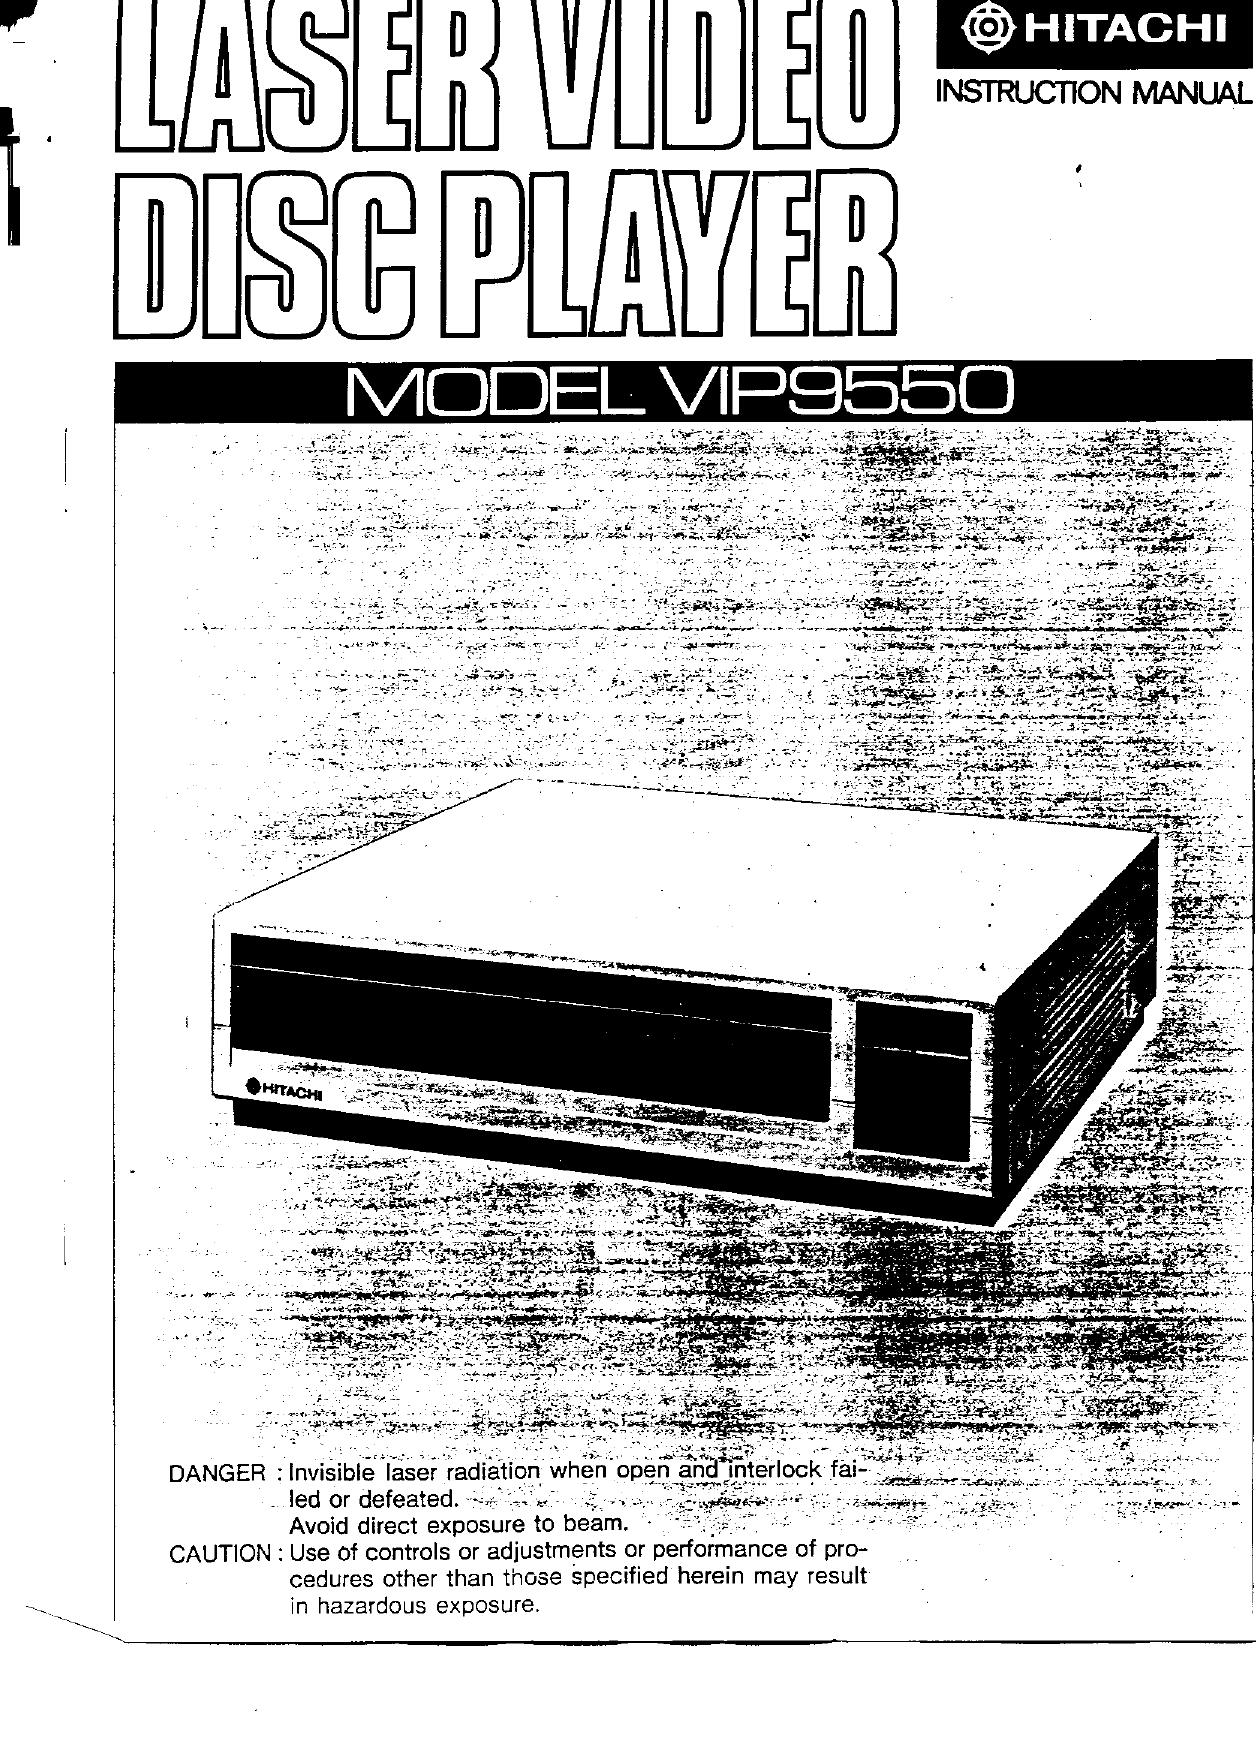 Laserdisc Players